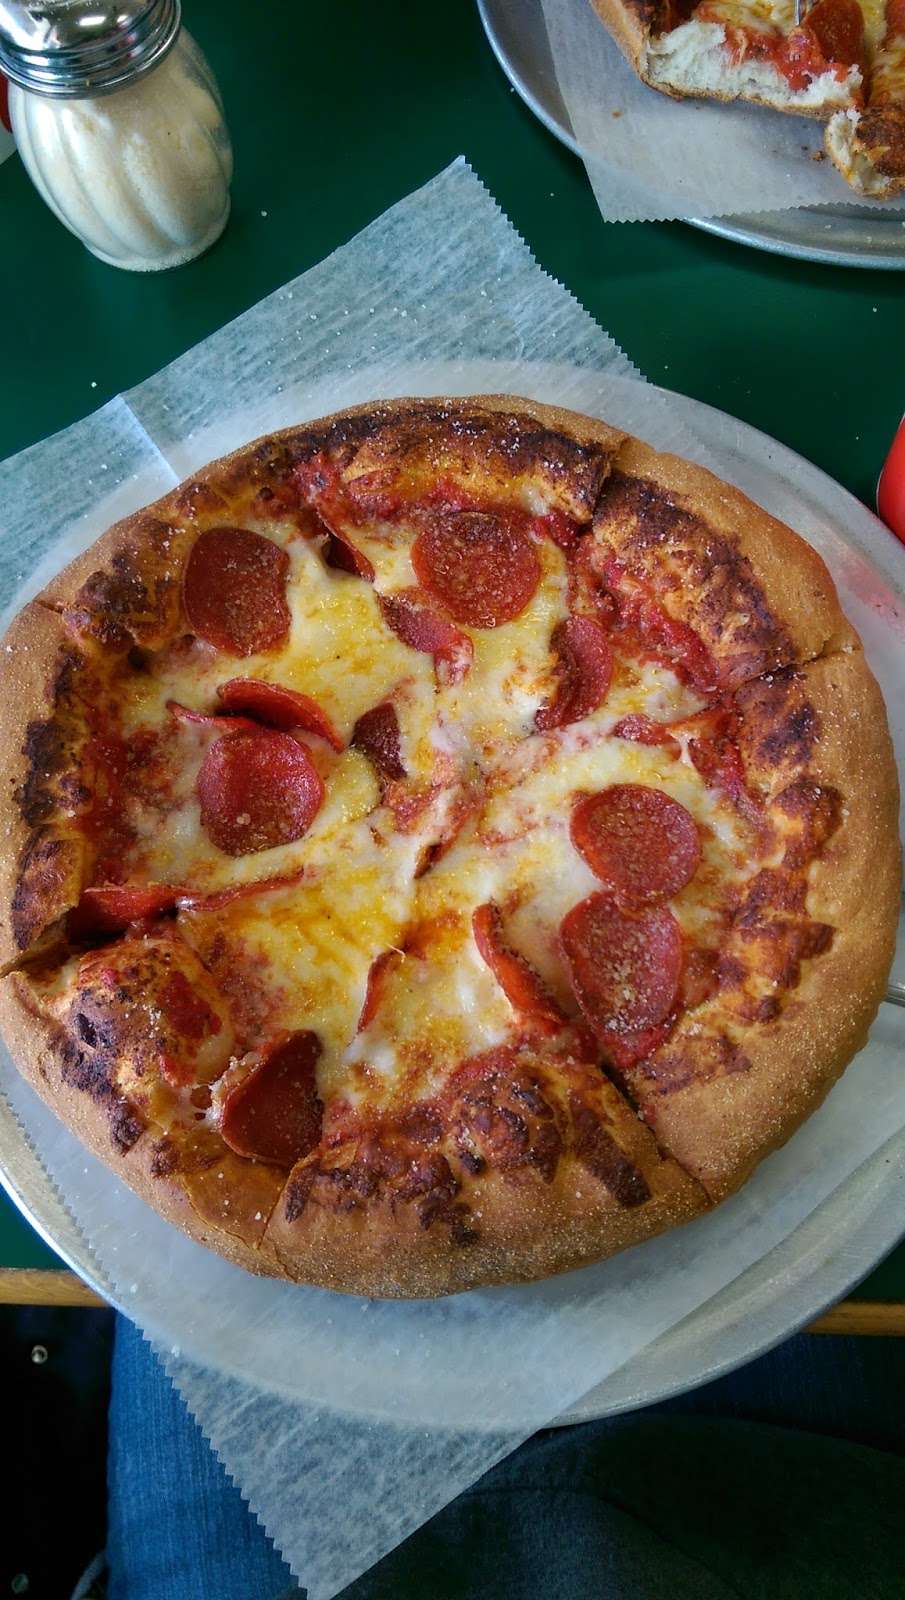 Primo Pizza | 7132 Salem Fields Blvd, Fredericksburg, VA 22407, USA | Phone: (540) 785-3500